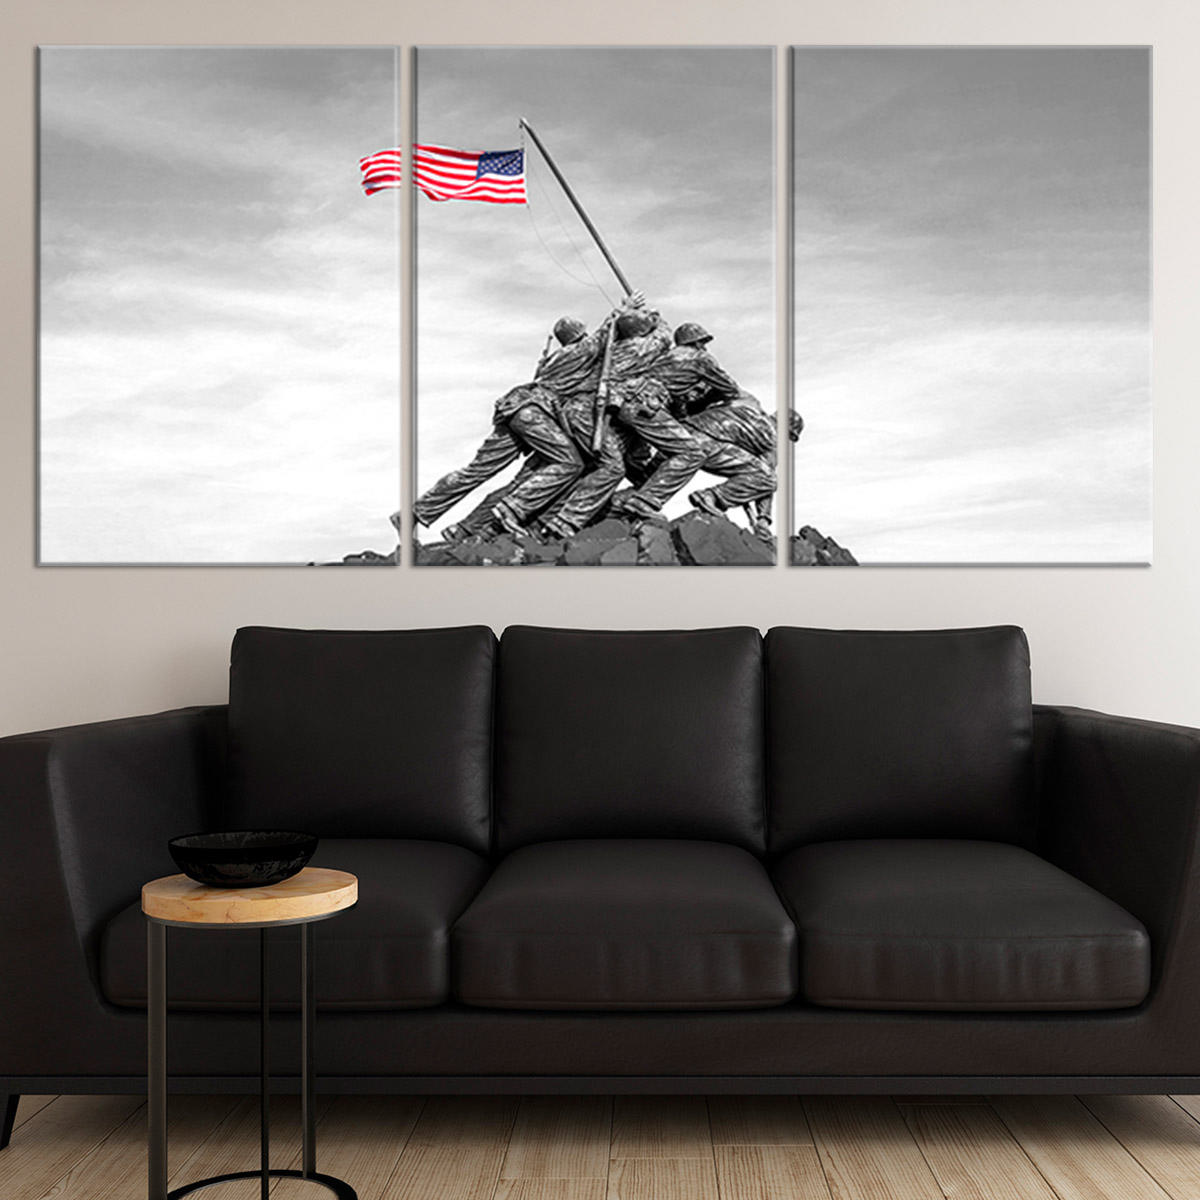 Iwo Jima Monument Memorial Wall Art